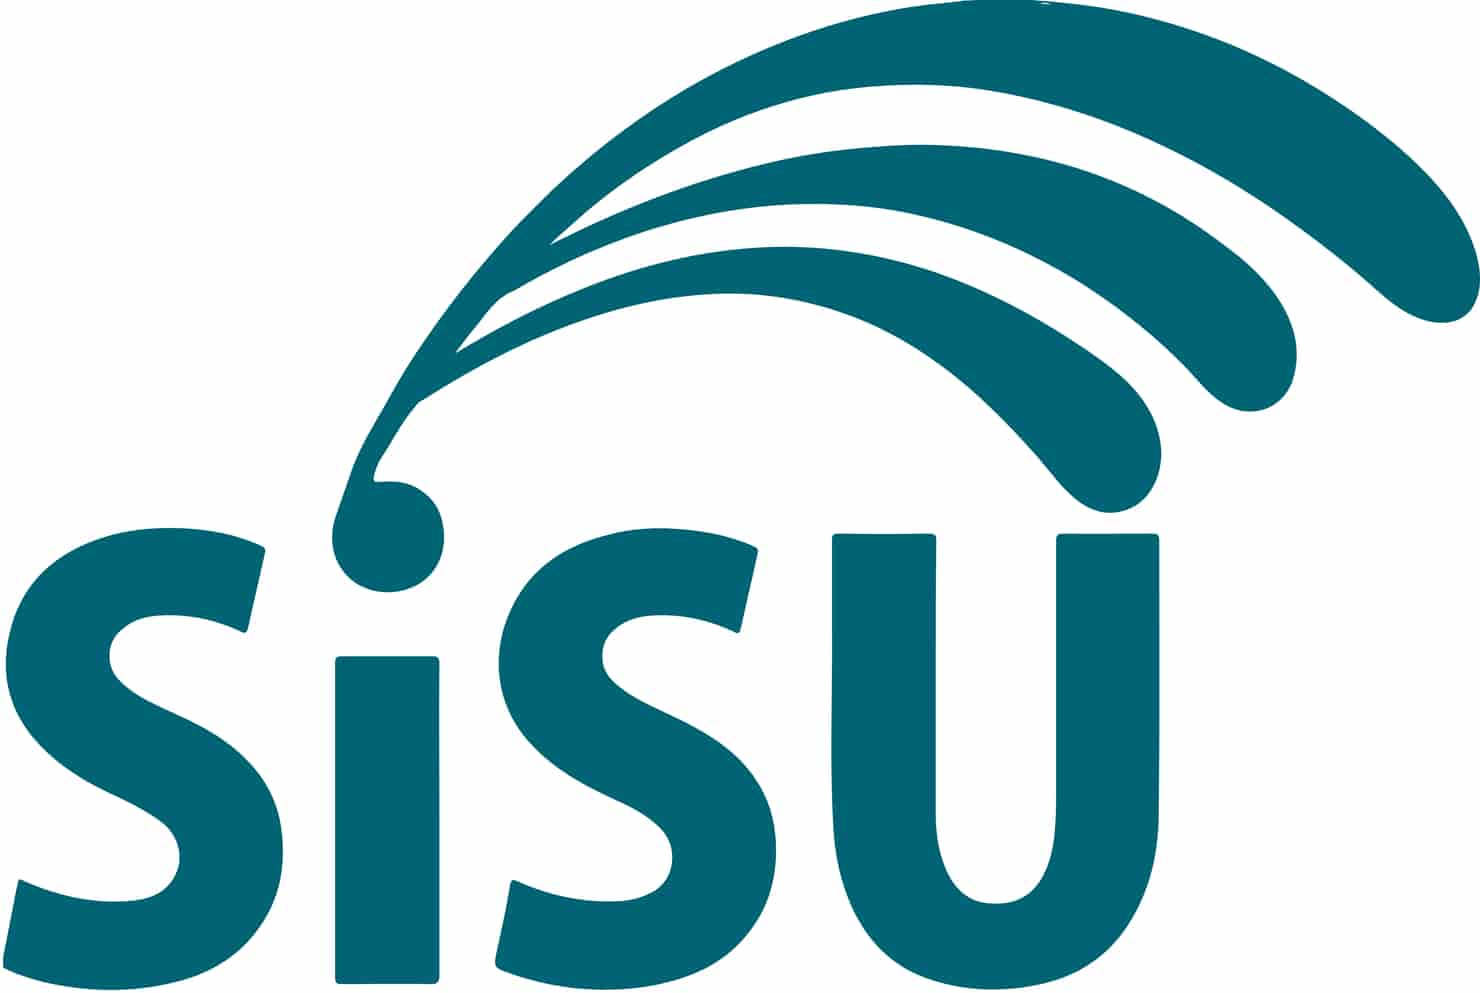 logo SISU